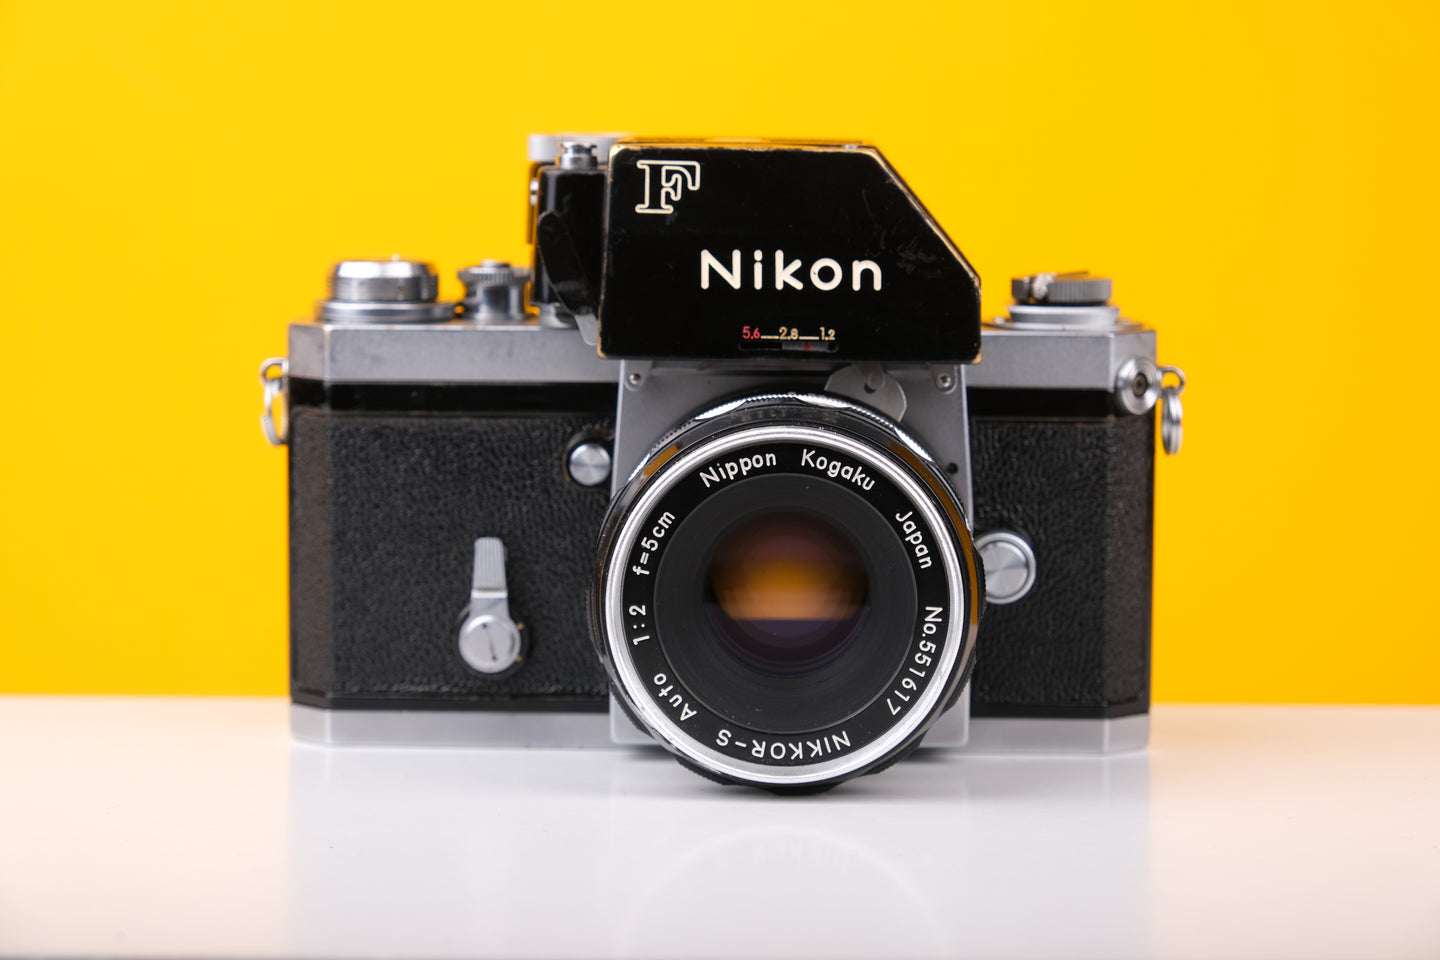 Nikon F Photomic 35mm Film Camera with Nikkor 50mm f2 Lens